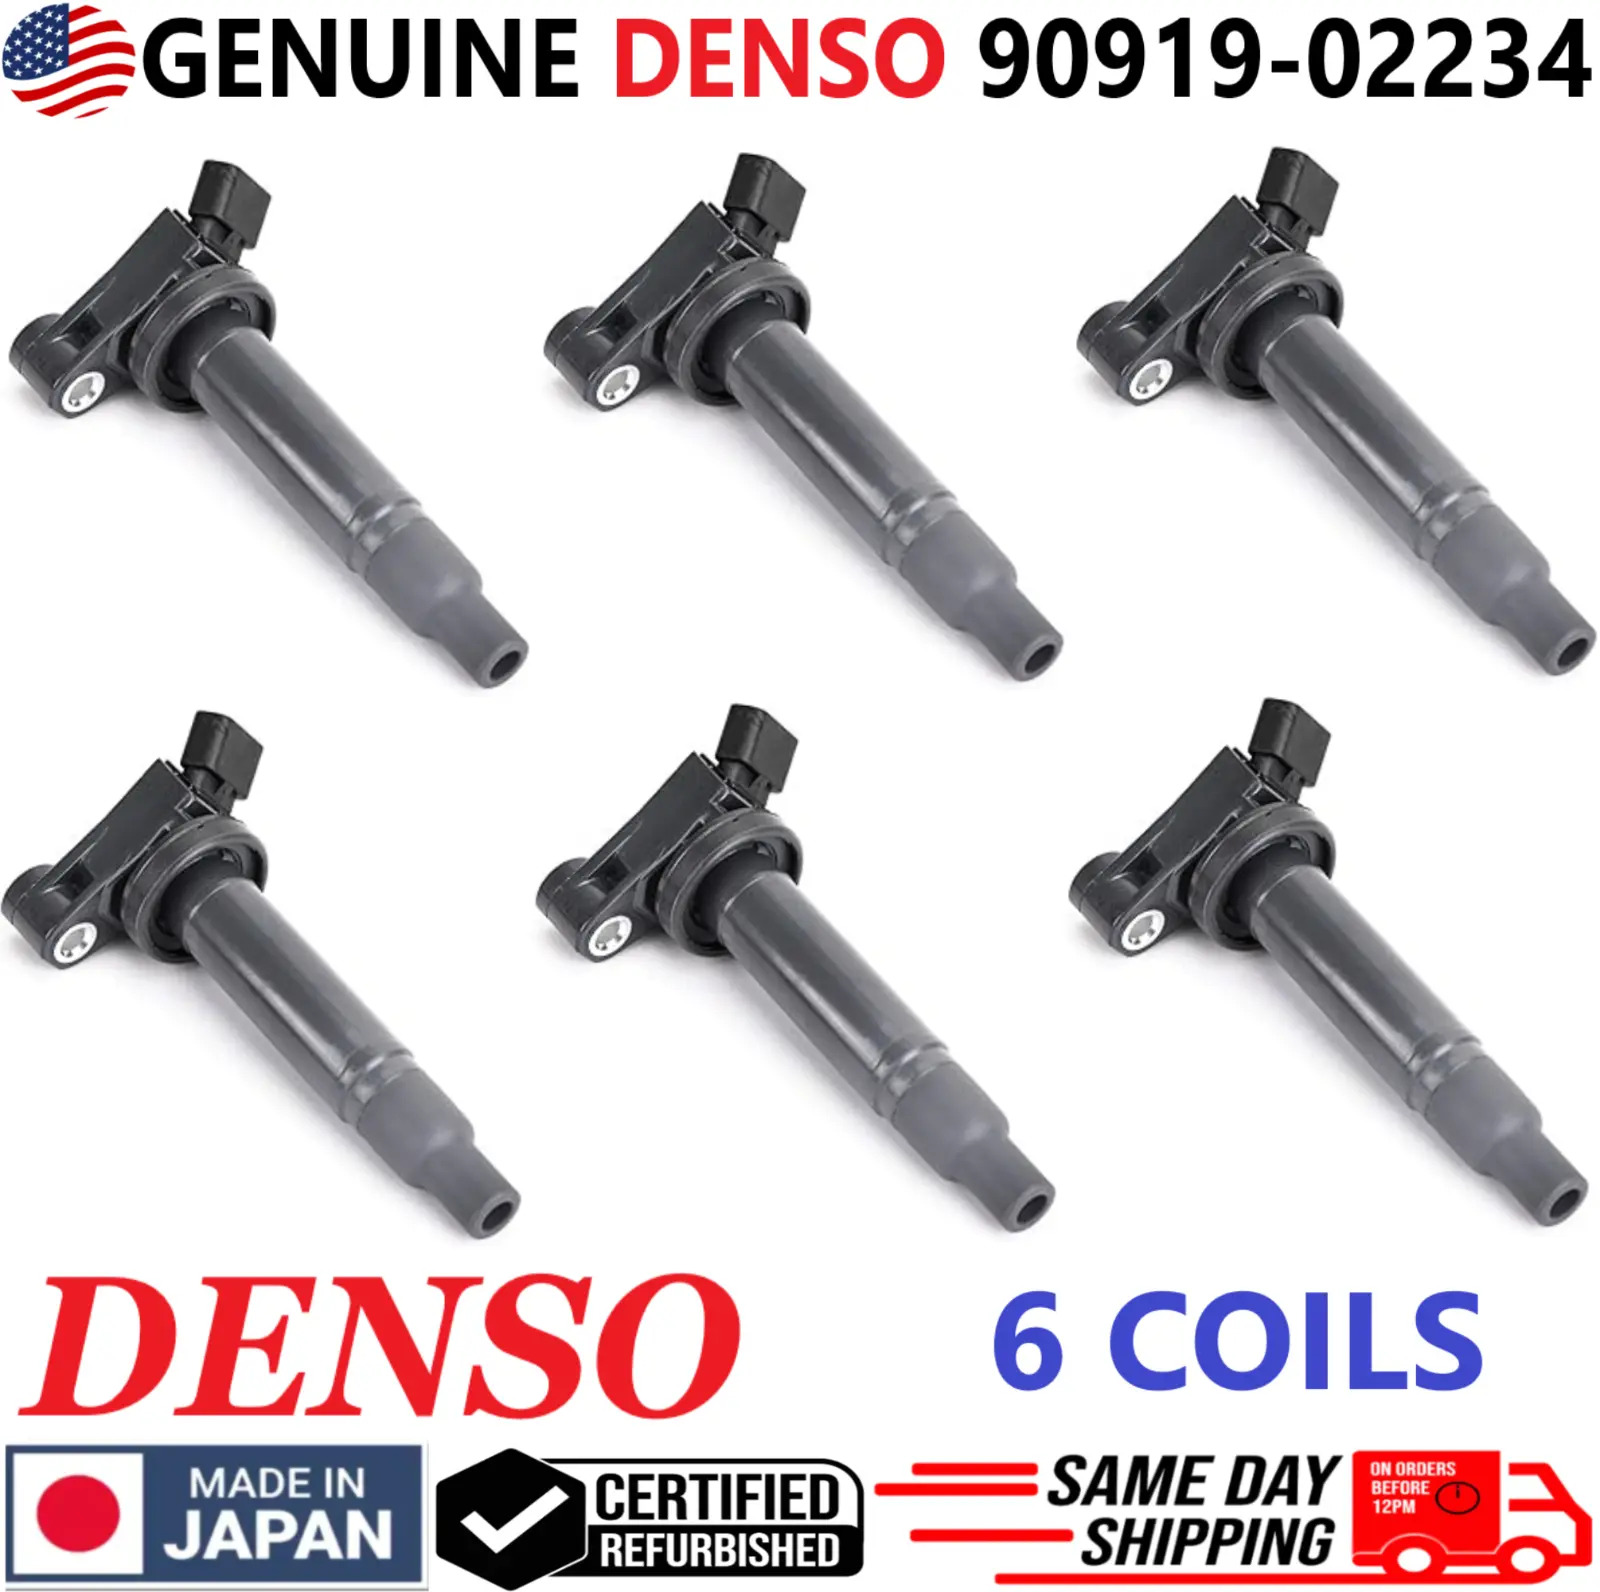 GENUINE DENSO Ignition Coils For 1999-2010 Toyota & Lexus 3.0L 3.3L, 90919-02234